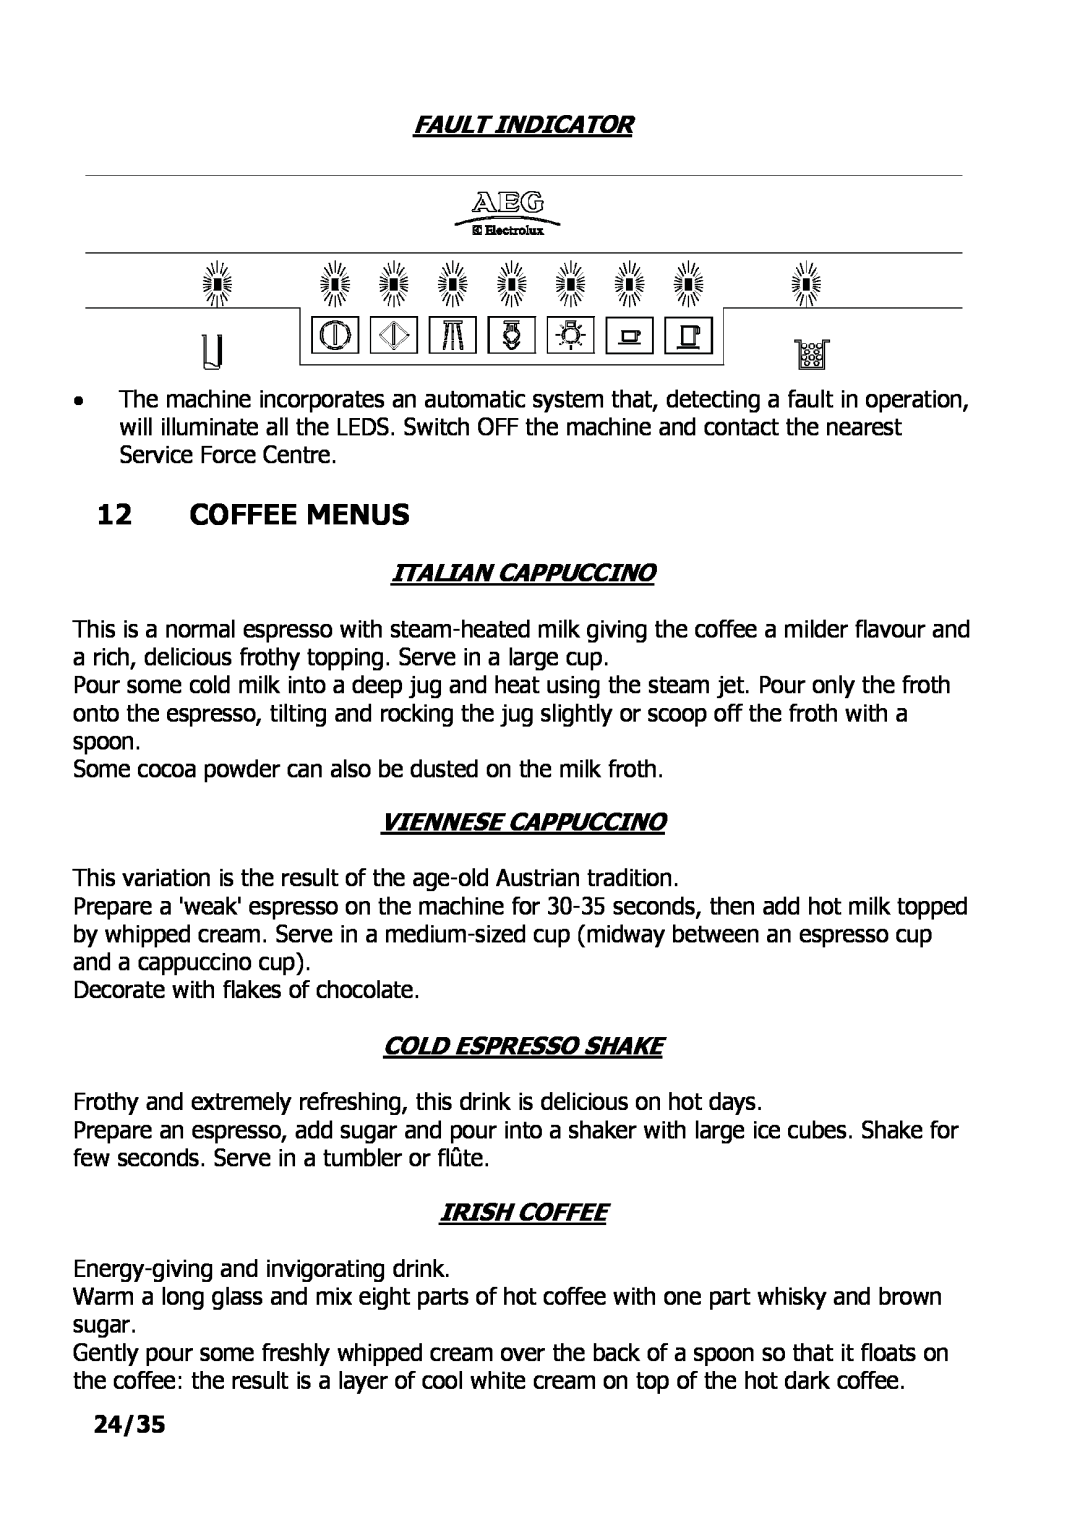 Electrolux PE 9038-m fww Coffee Menus, Fault Indicator, Italian Cappuccino, Viennese Cappuccino, Cold Espresso Shake 